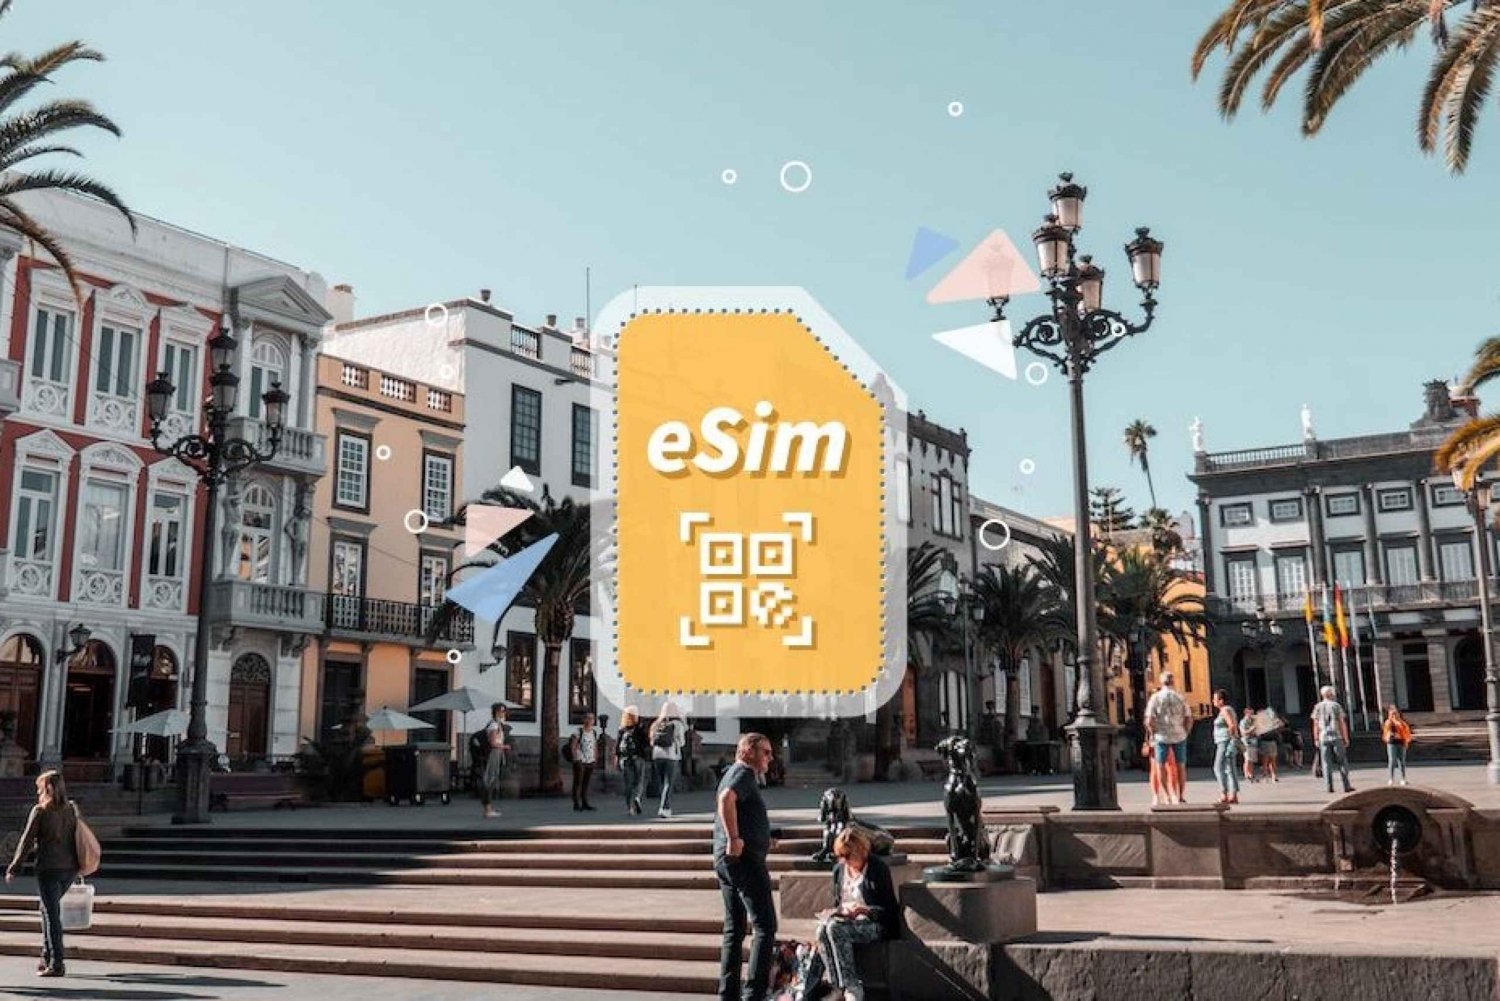 Spanien/Europa: 5G eSim mobildataplan